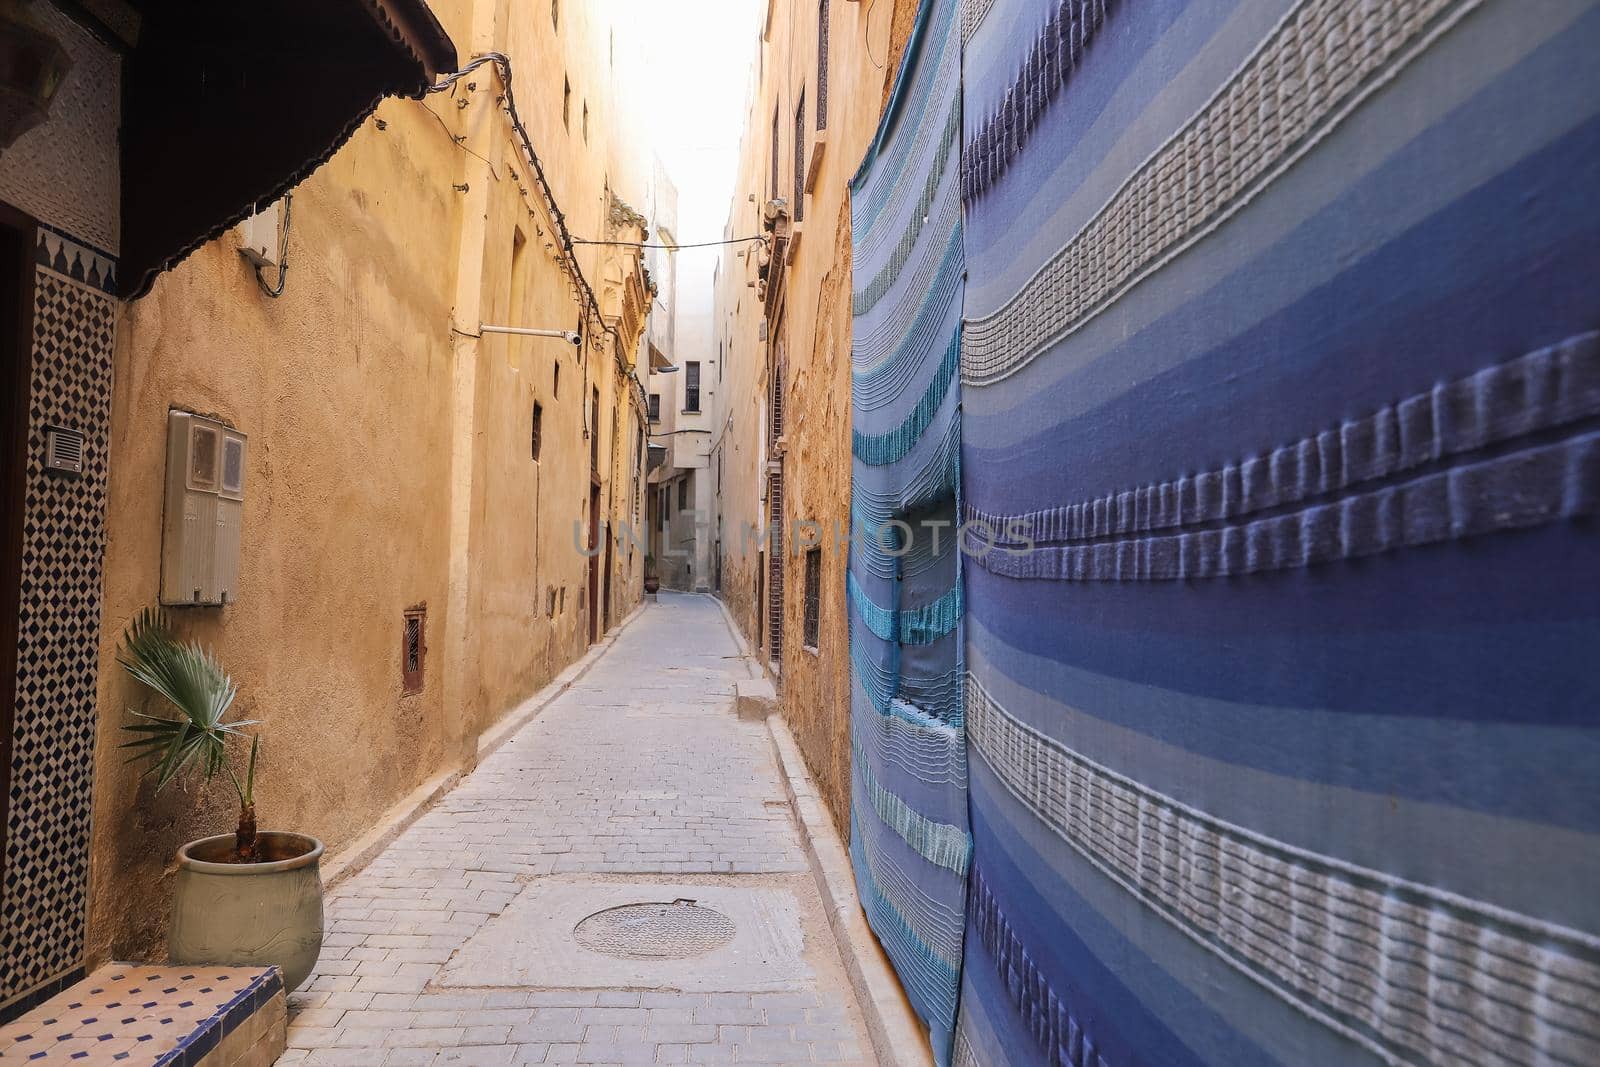 A Narrow Street in Fez City, Morocco